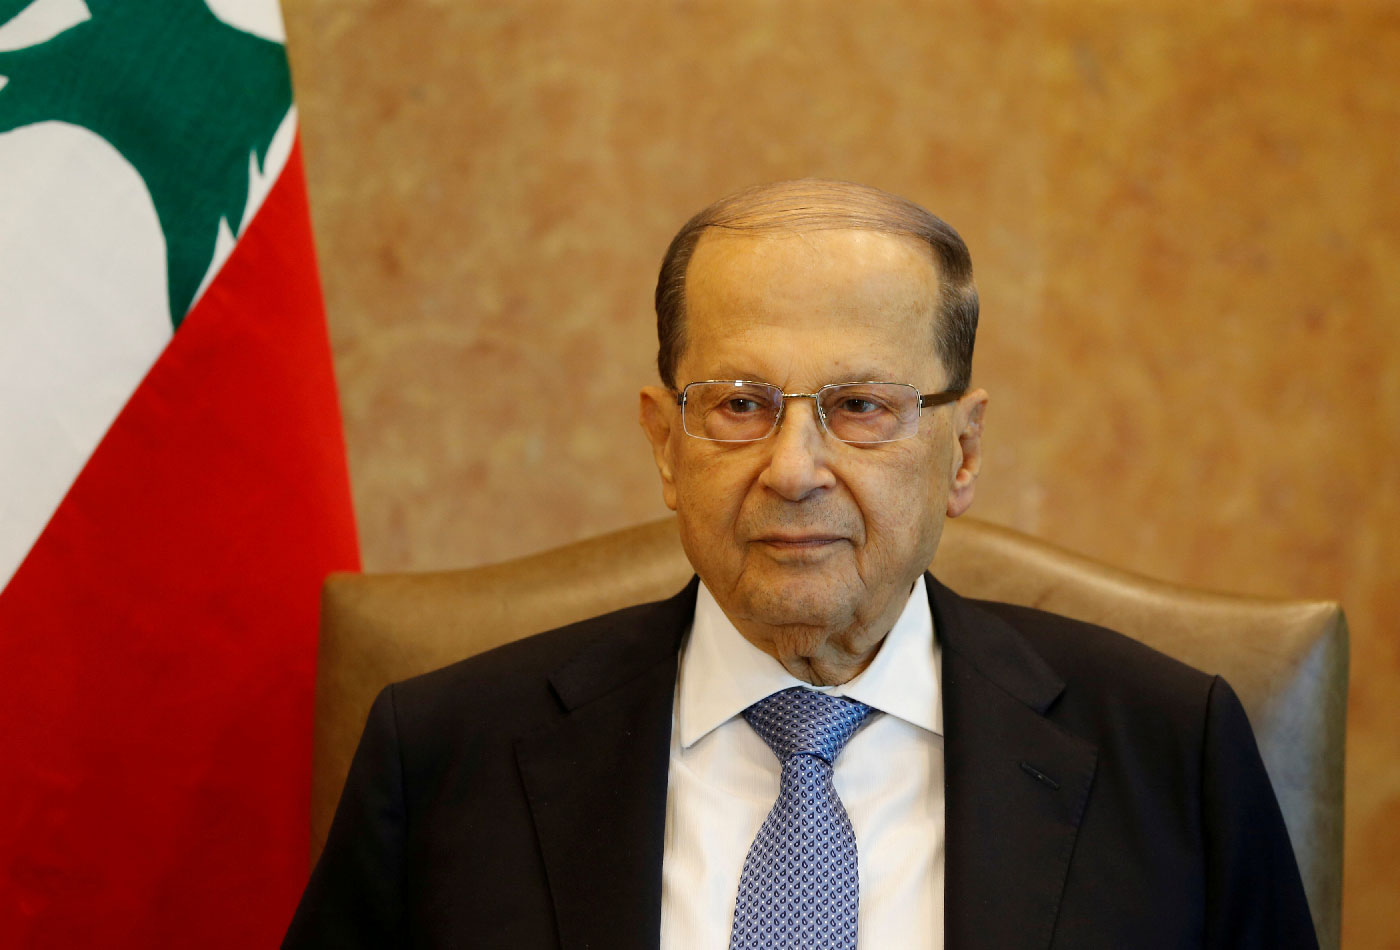  Lebanese President Michel Aoun is seen at the presidential palace in Baabda, Lebanon, November 7, 2017.